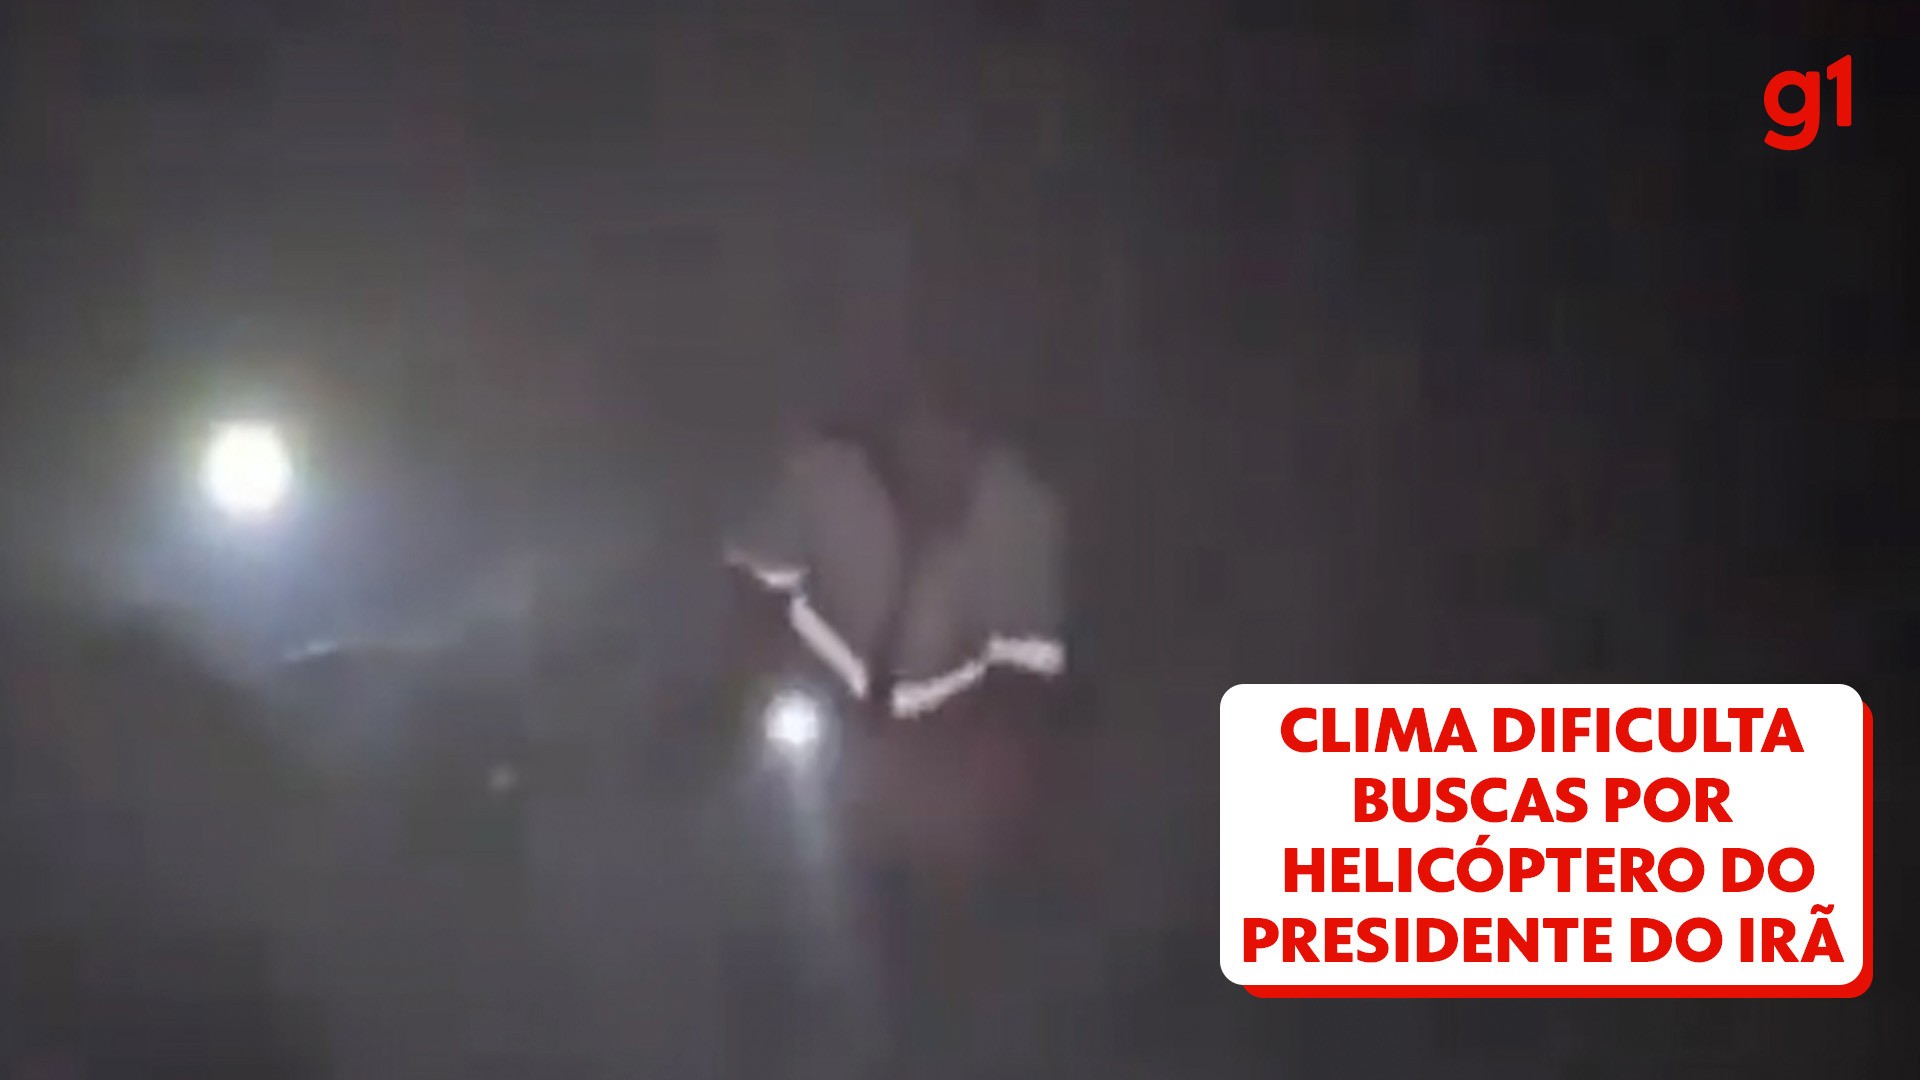 VÍDEOS: Helicóptero com o presidente do Irã sofre acidente